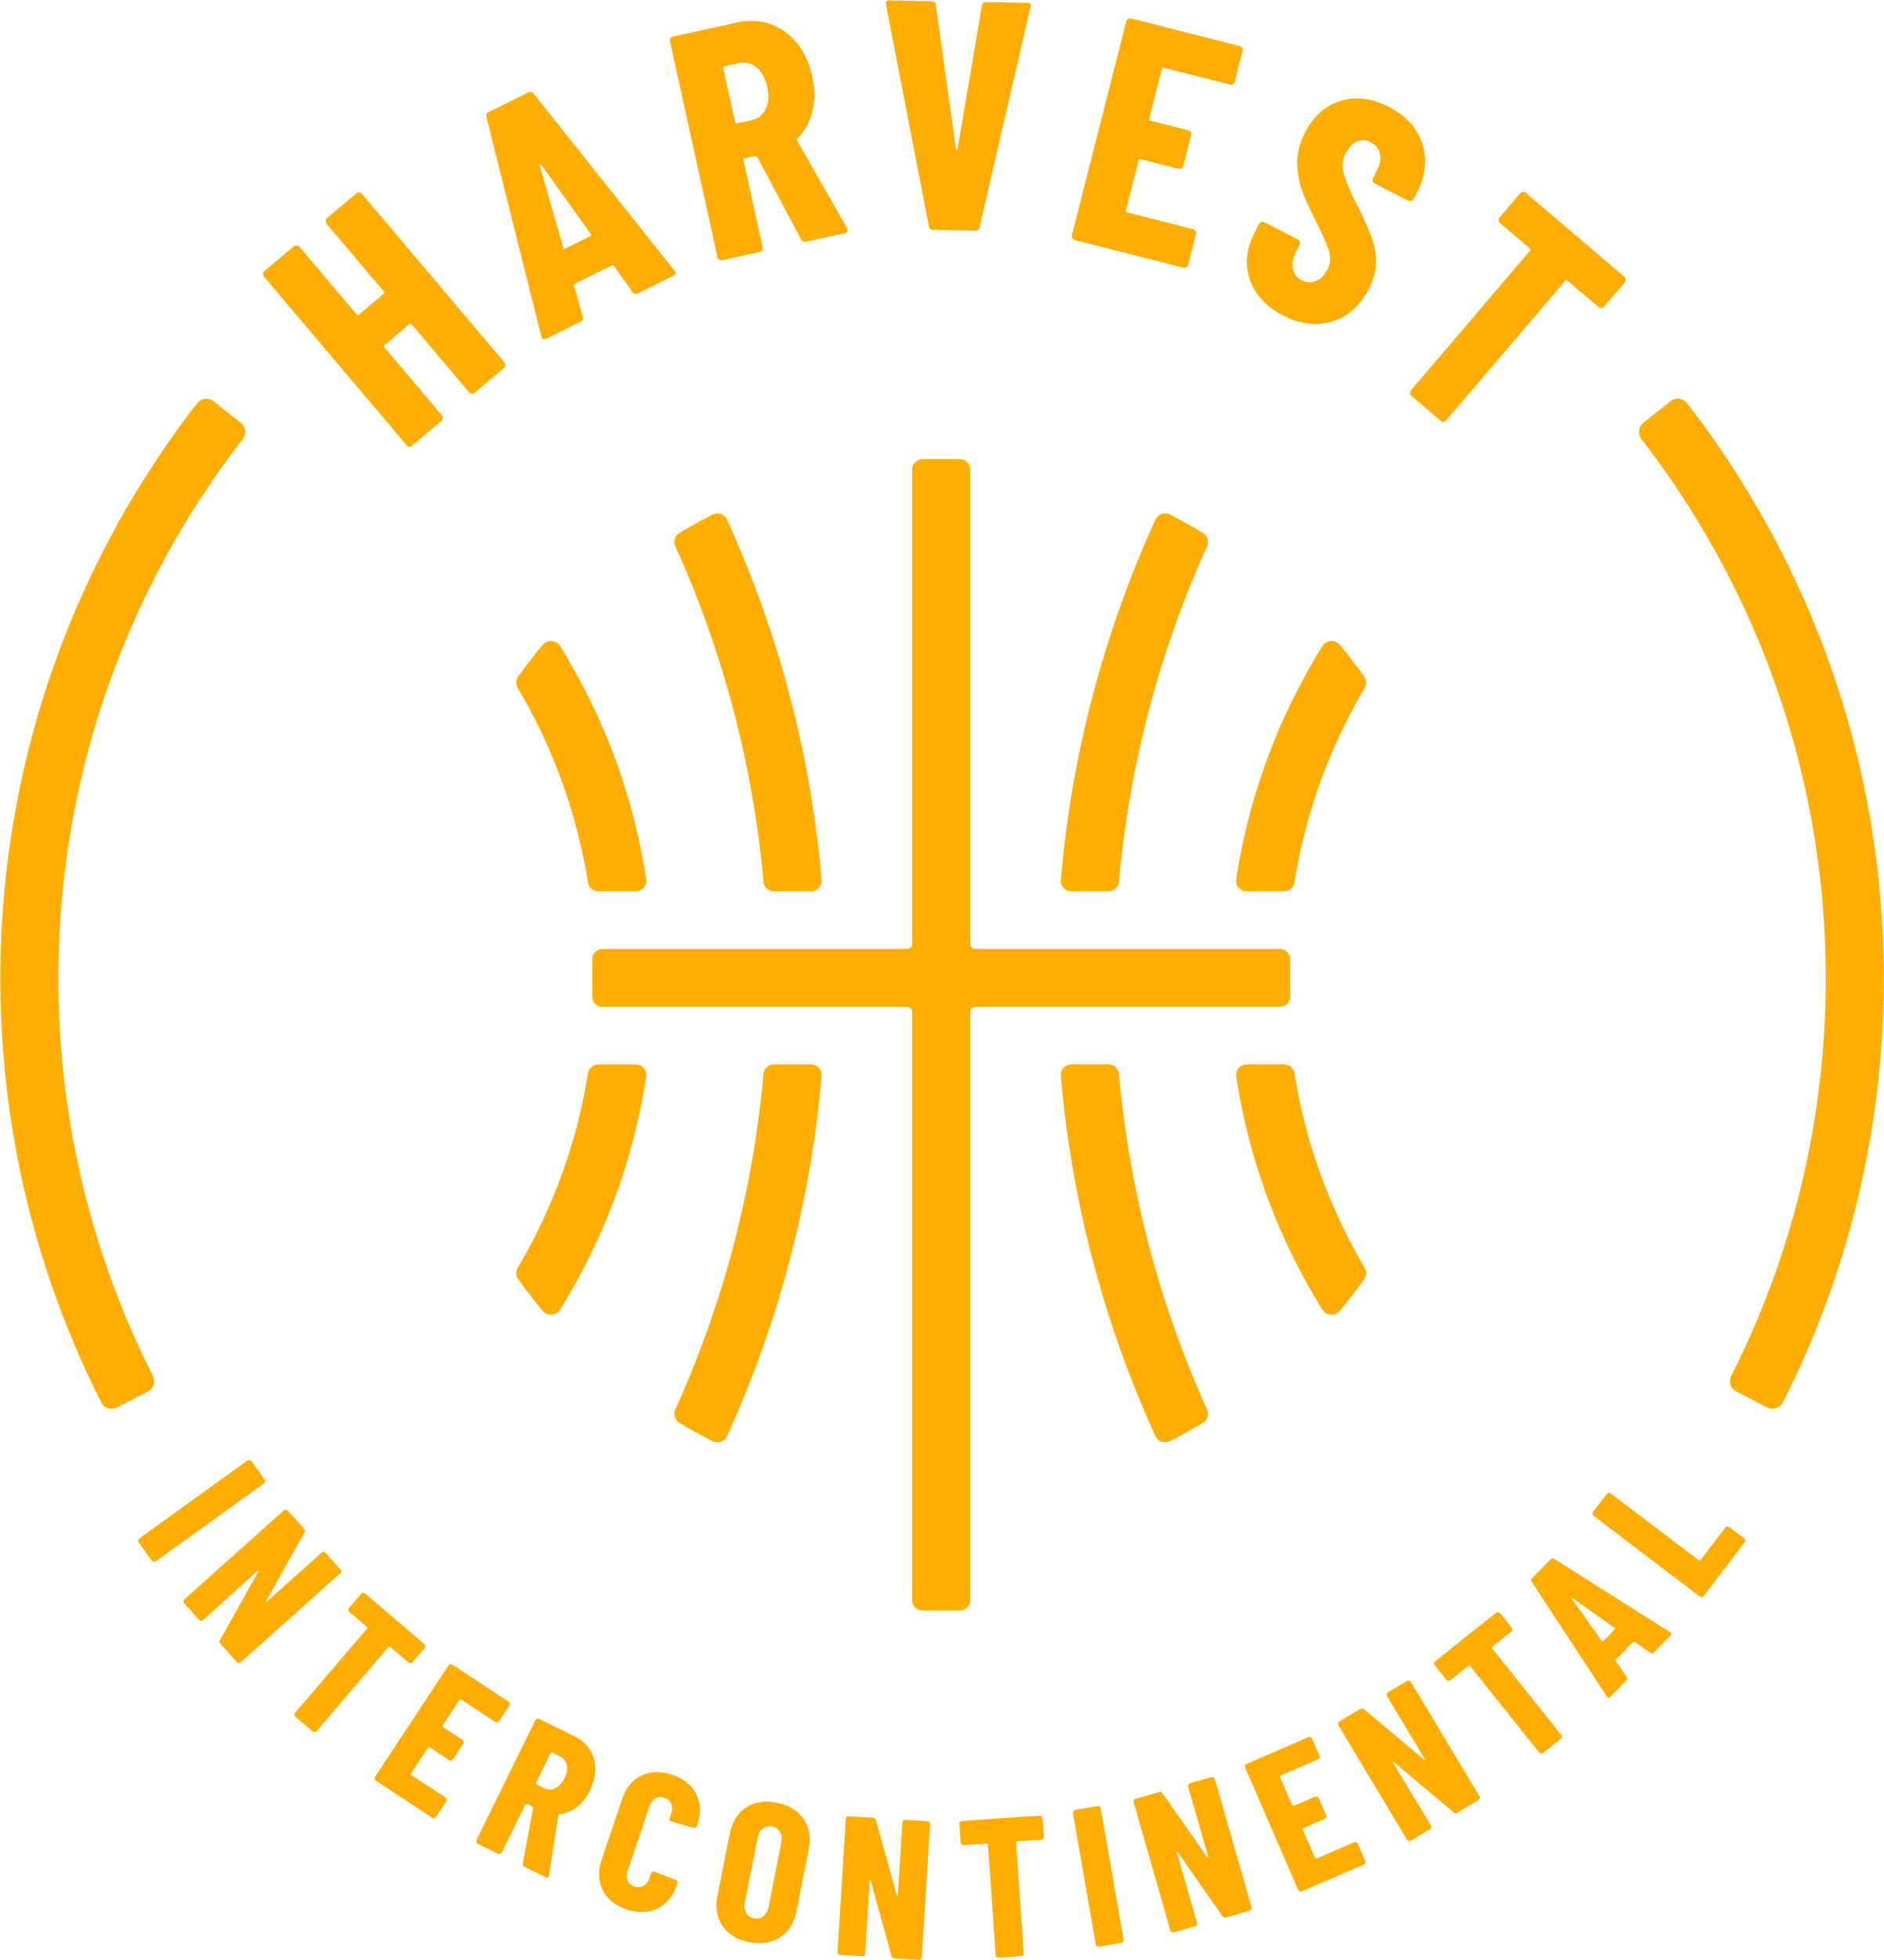 harvestchurchnj.com